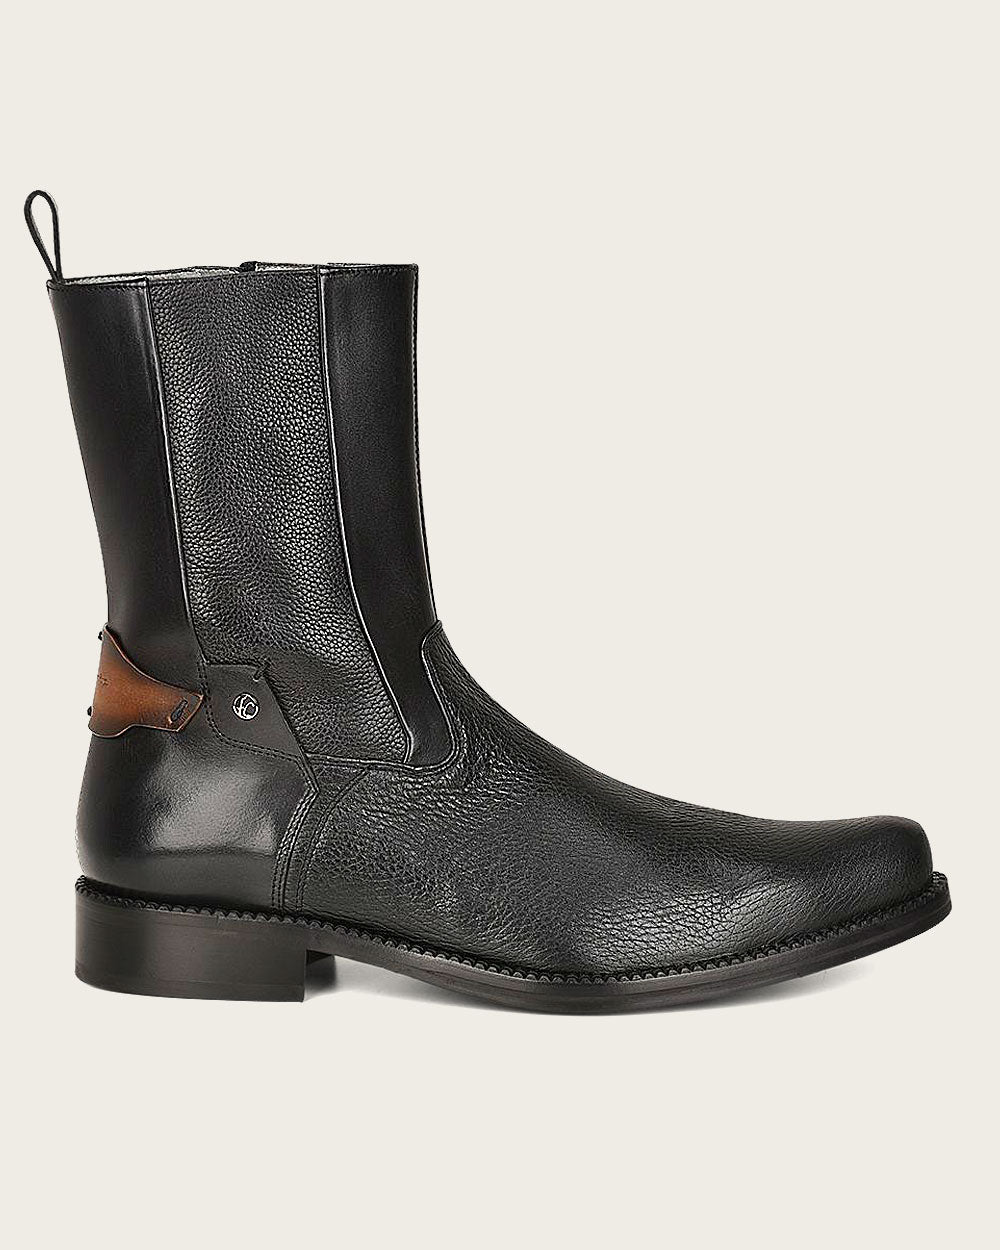 Black Deer Leather Boots: All-terrain elegance by Cuadra. 